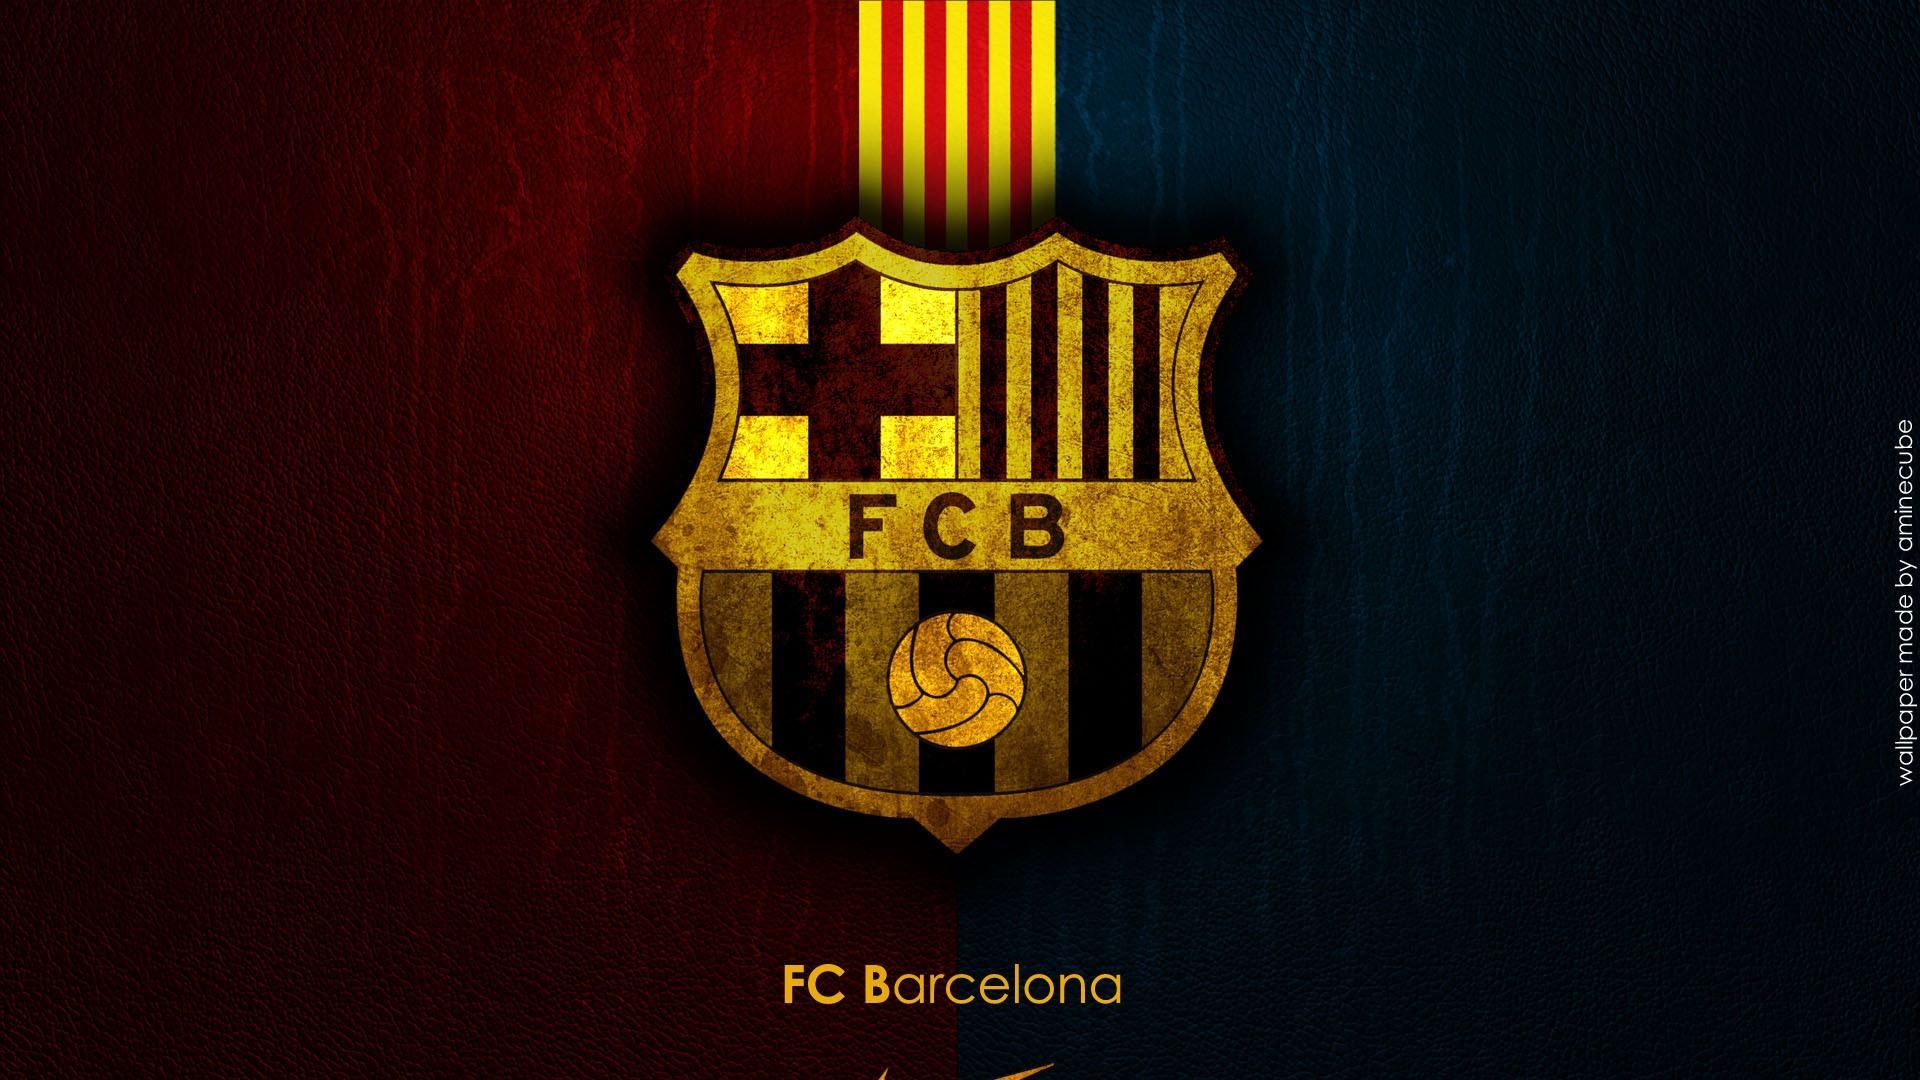 Download Wallpaper 1920x1080 Barcelona, Spain, Football club